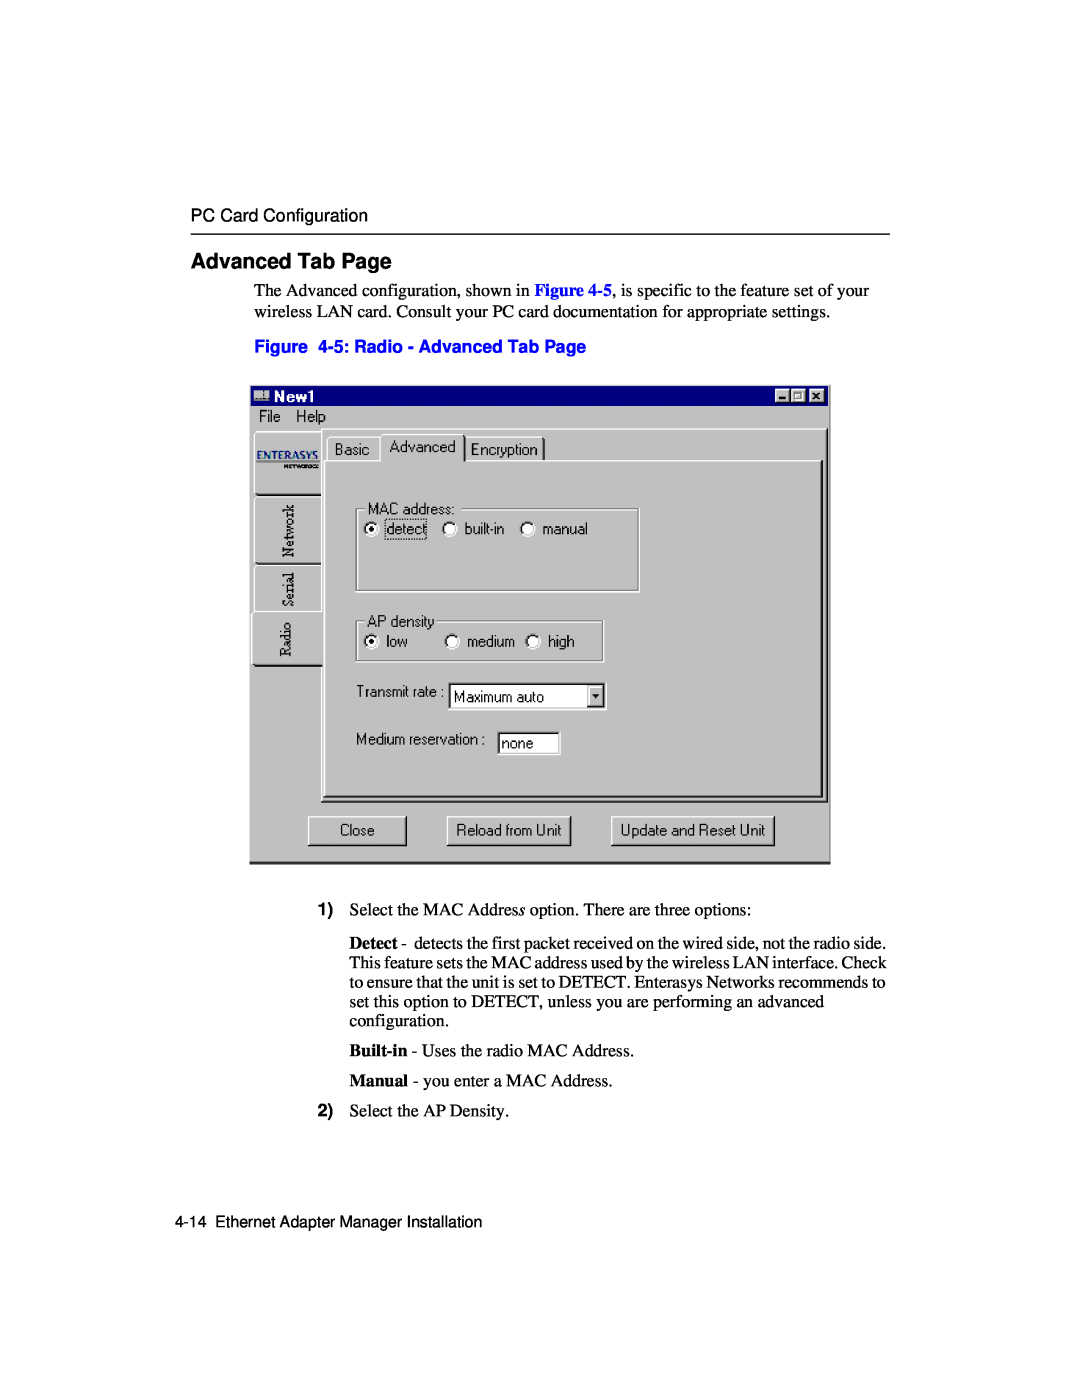 Enterasys Networks Wireless Ethernet Adapter I manual 5 Radio - Advanced Tab Page 